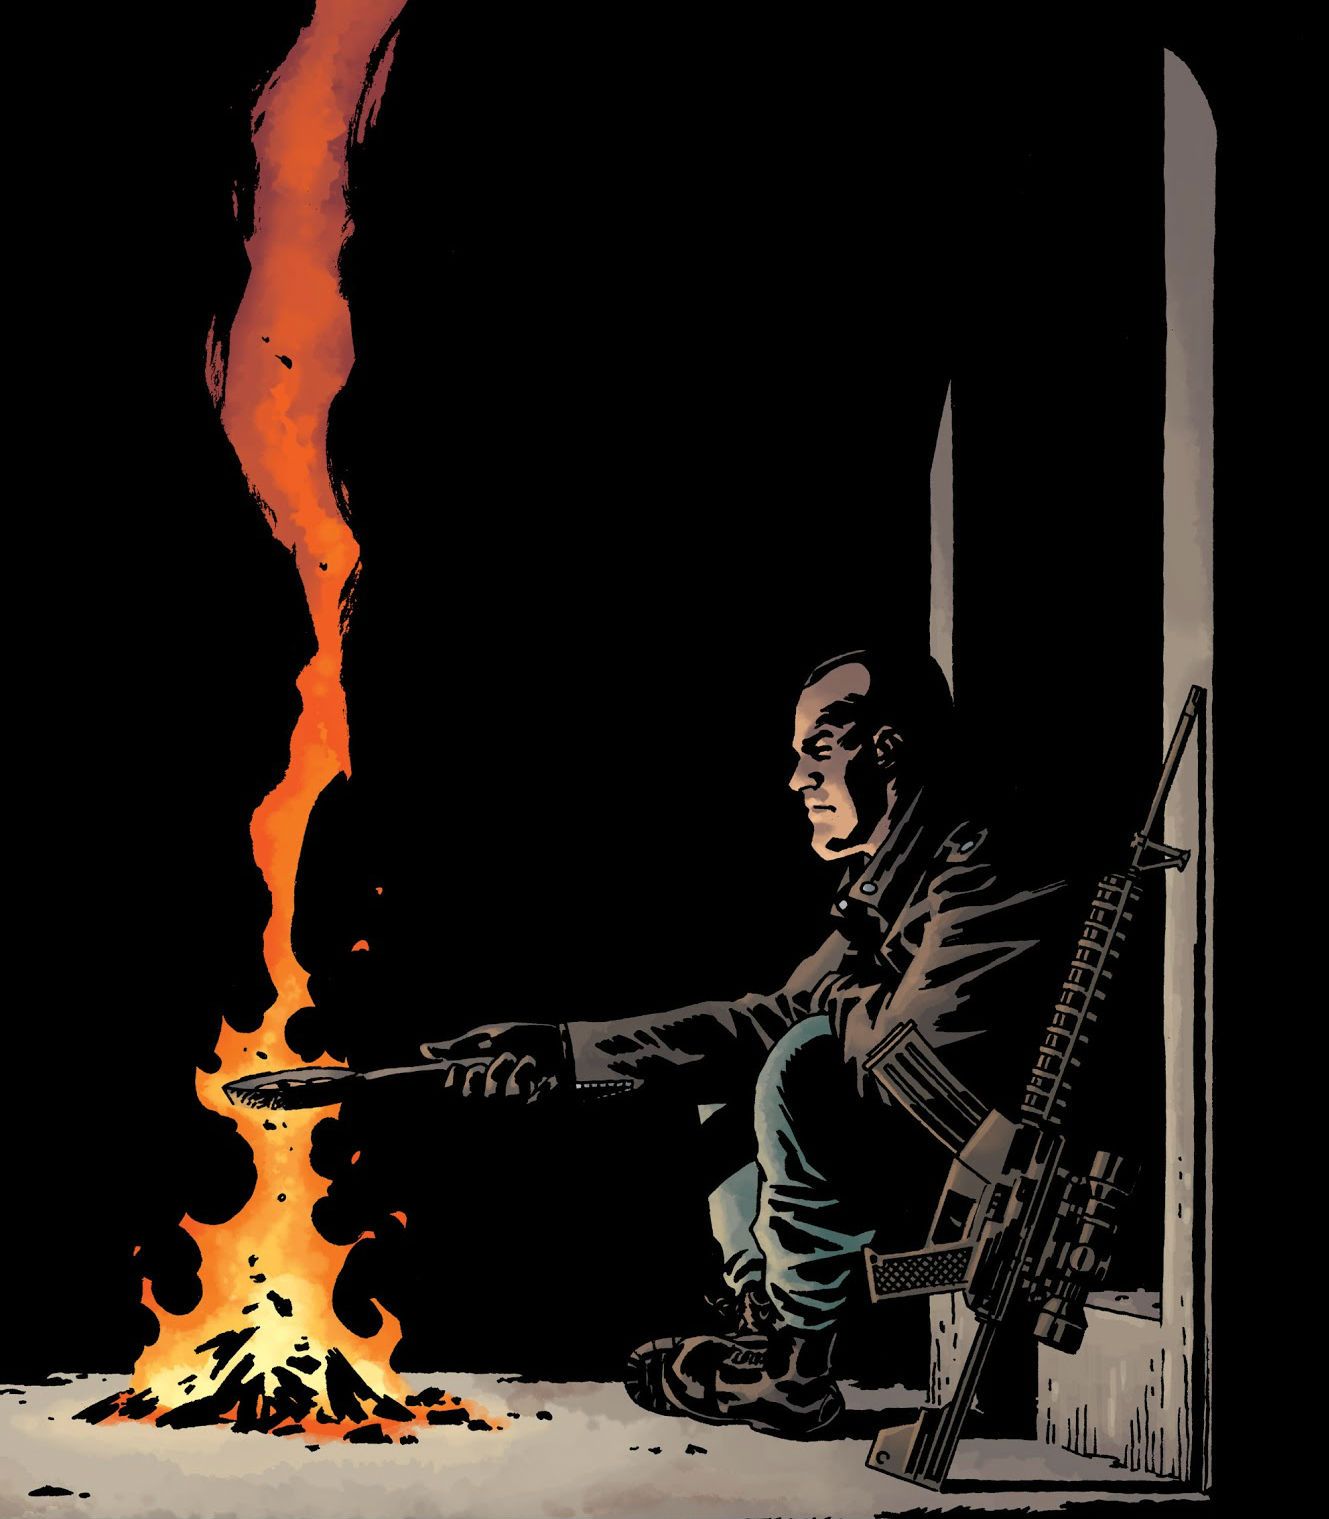 Negan is banished in The Walking Dead comics